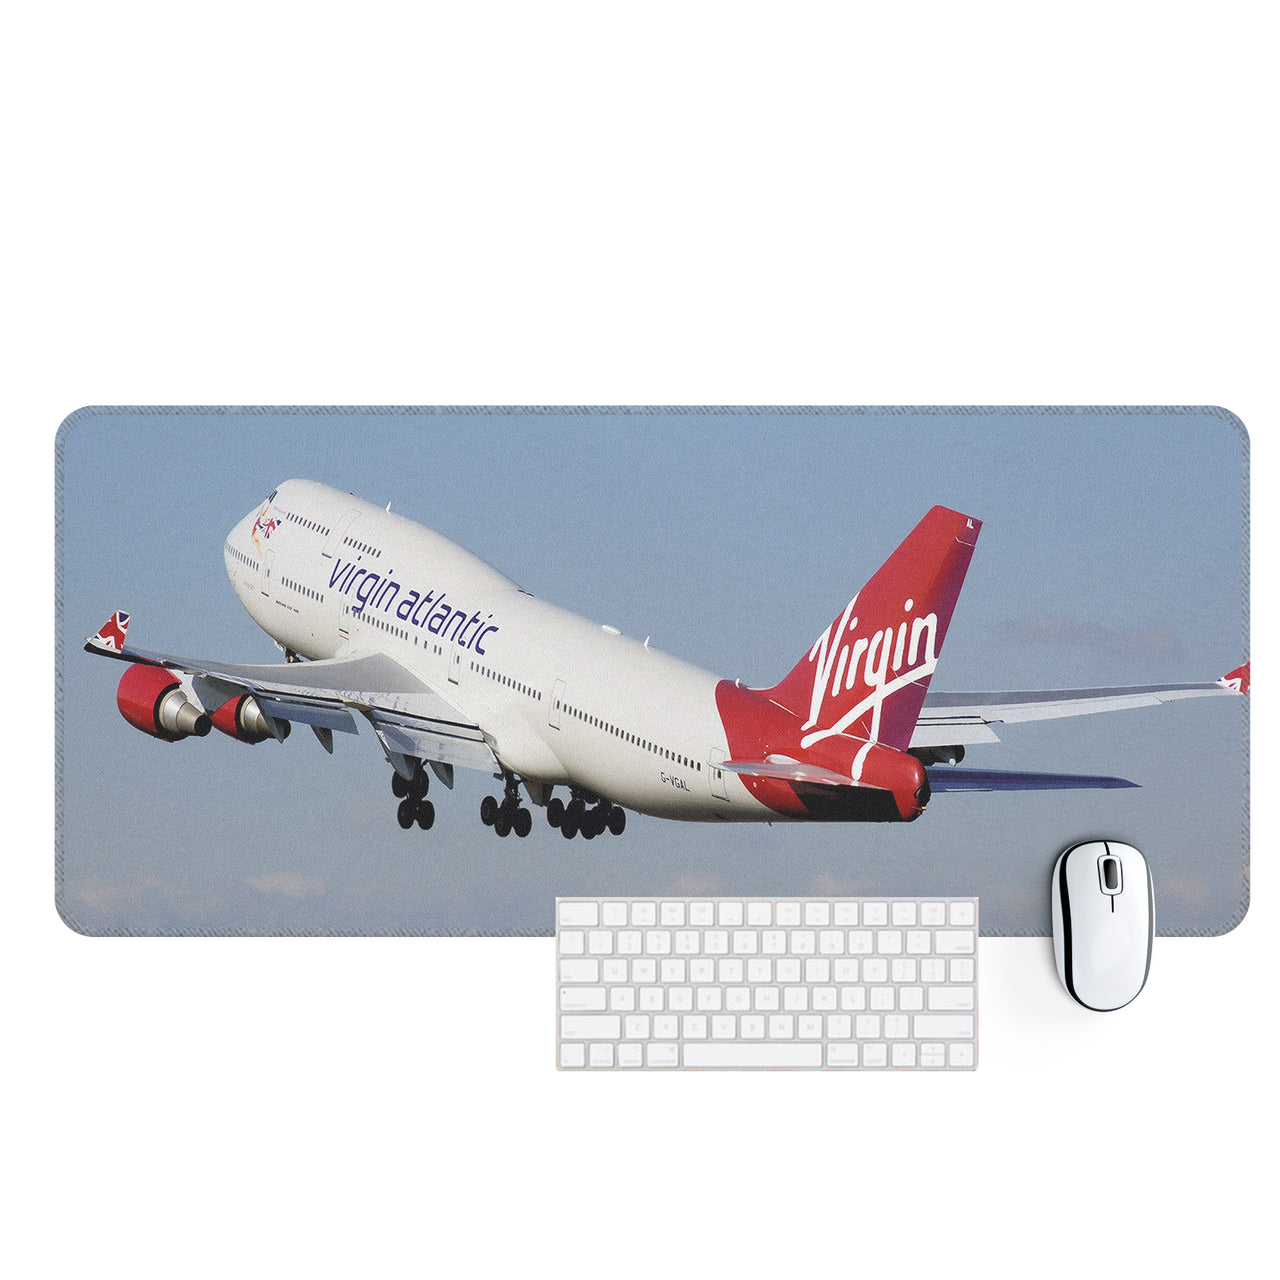 Virgin Atlantic Boeing 747 Designed Desk Mats